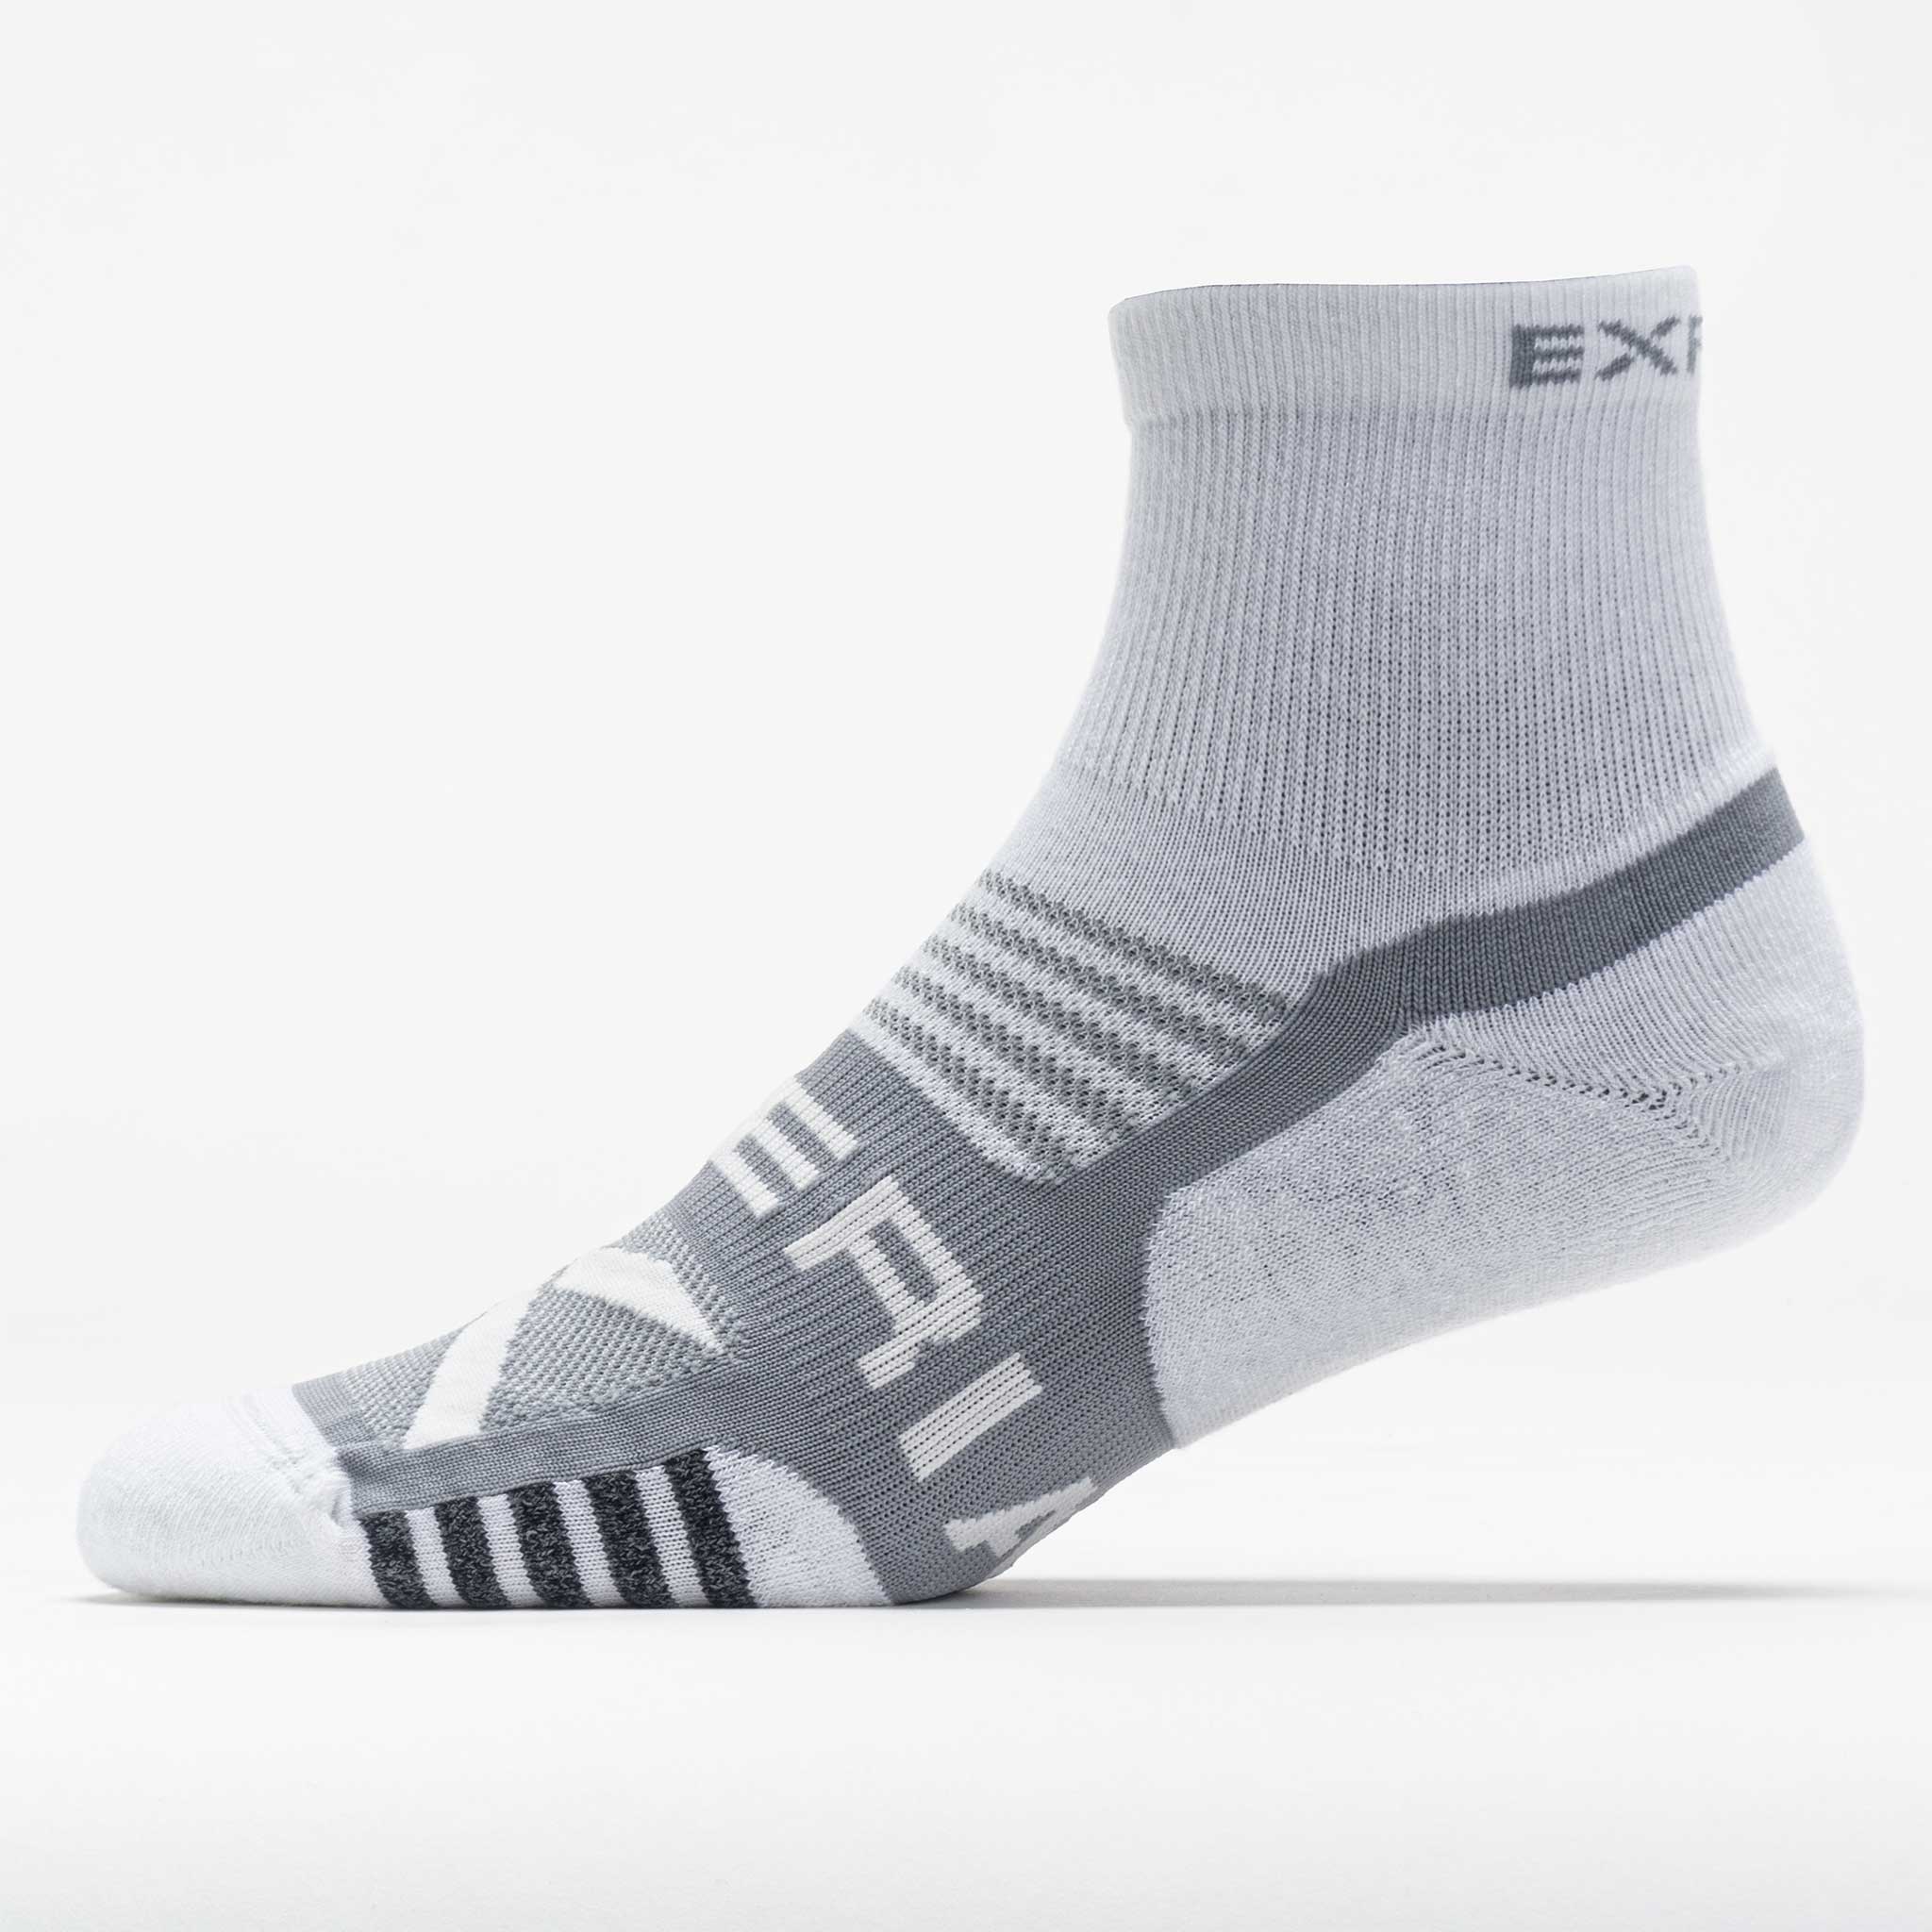 Thorlo Experia Ultra Light Padding Tennis Ankle Socks